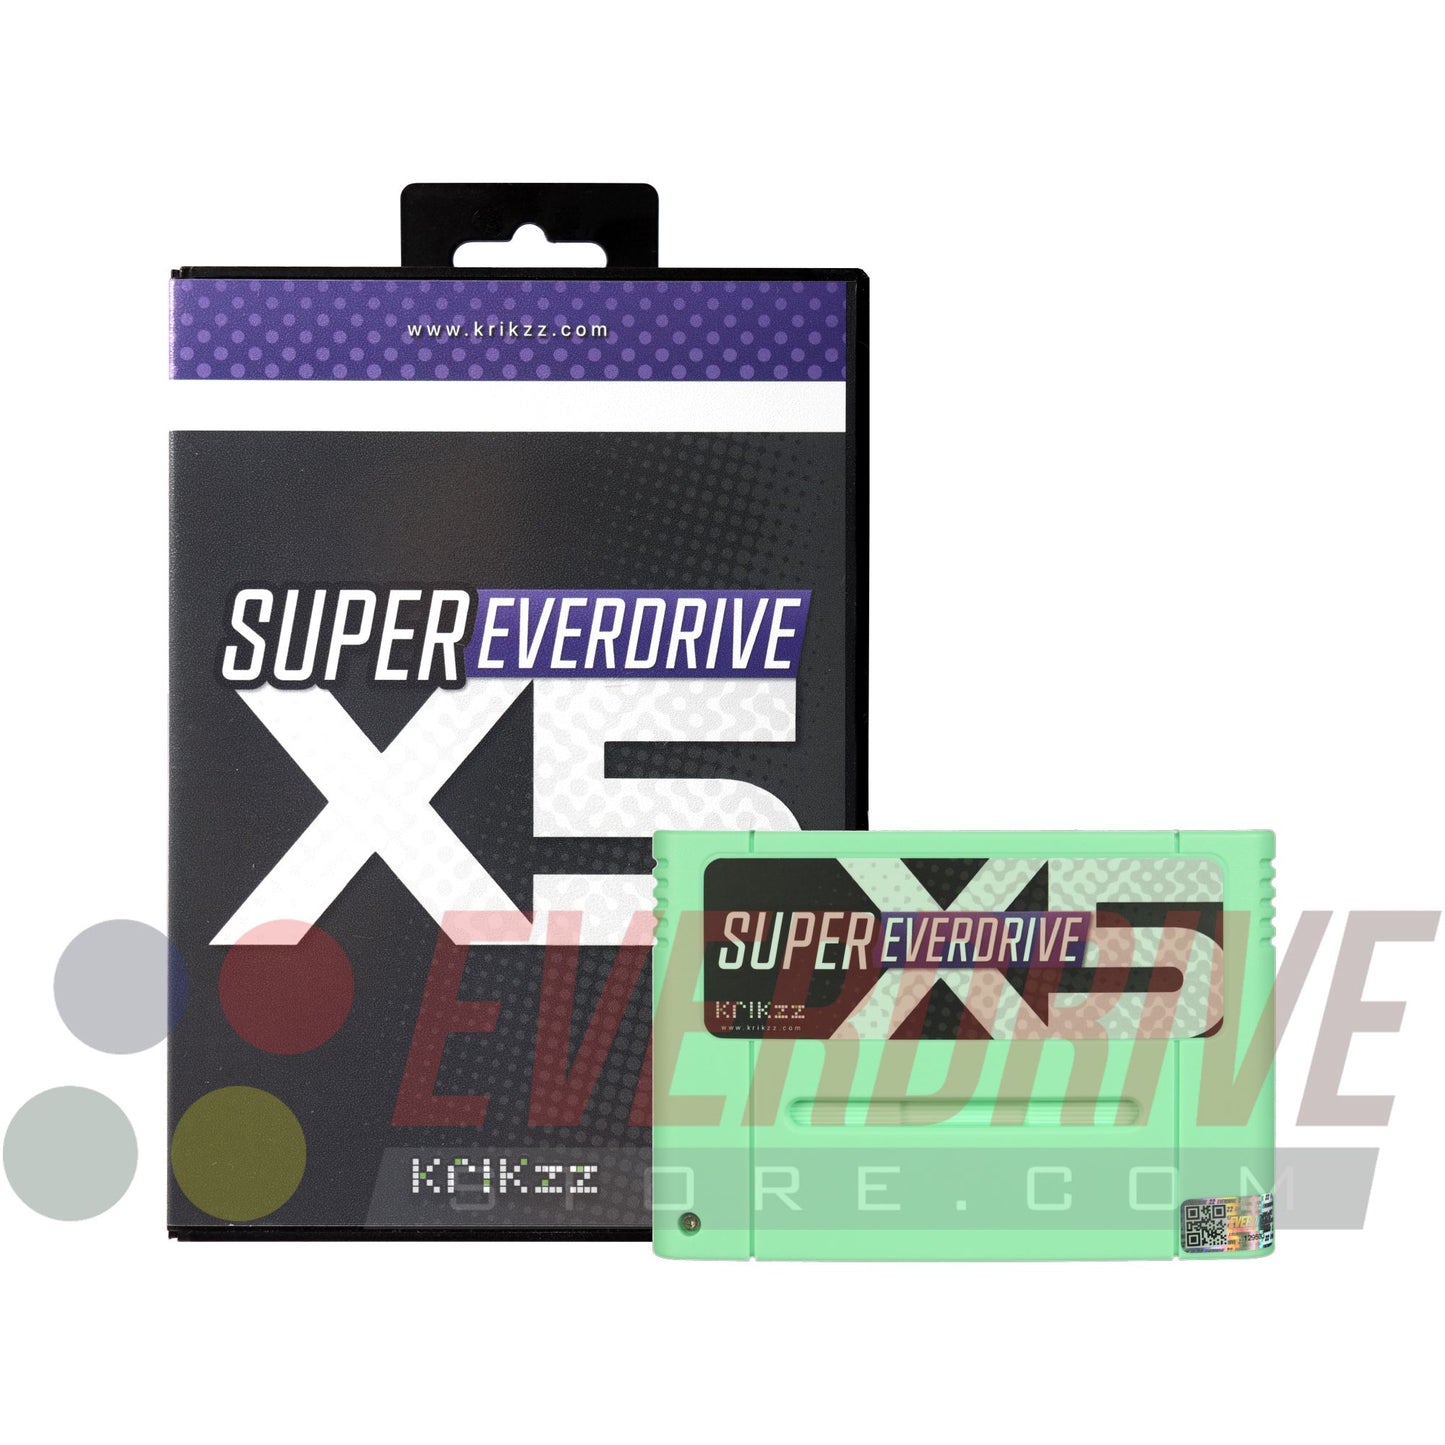 Super Everdrive X5 - Mint